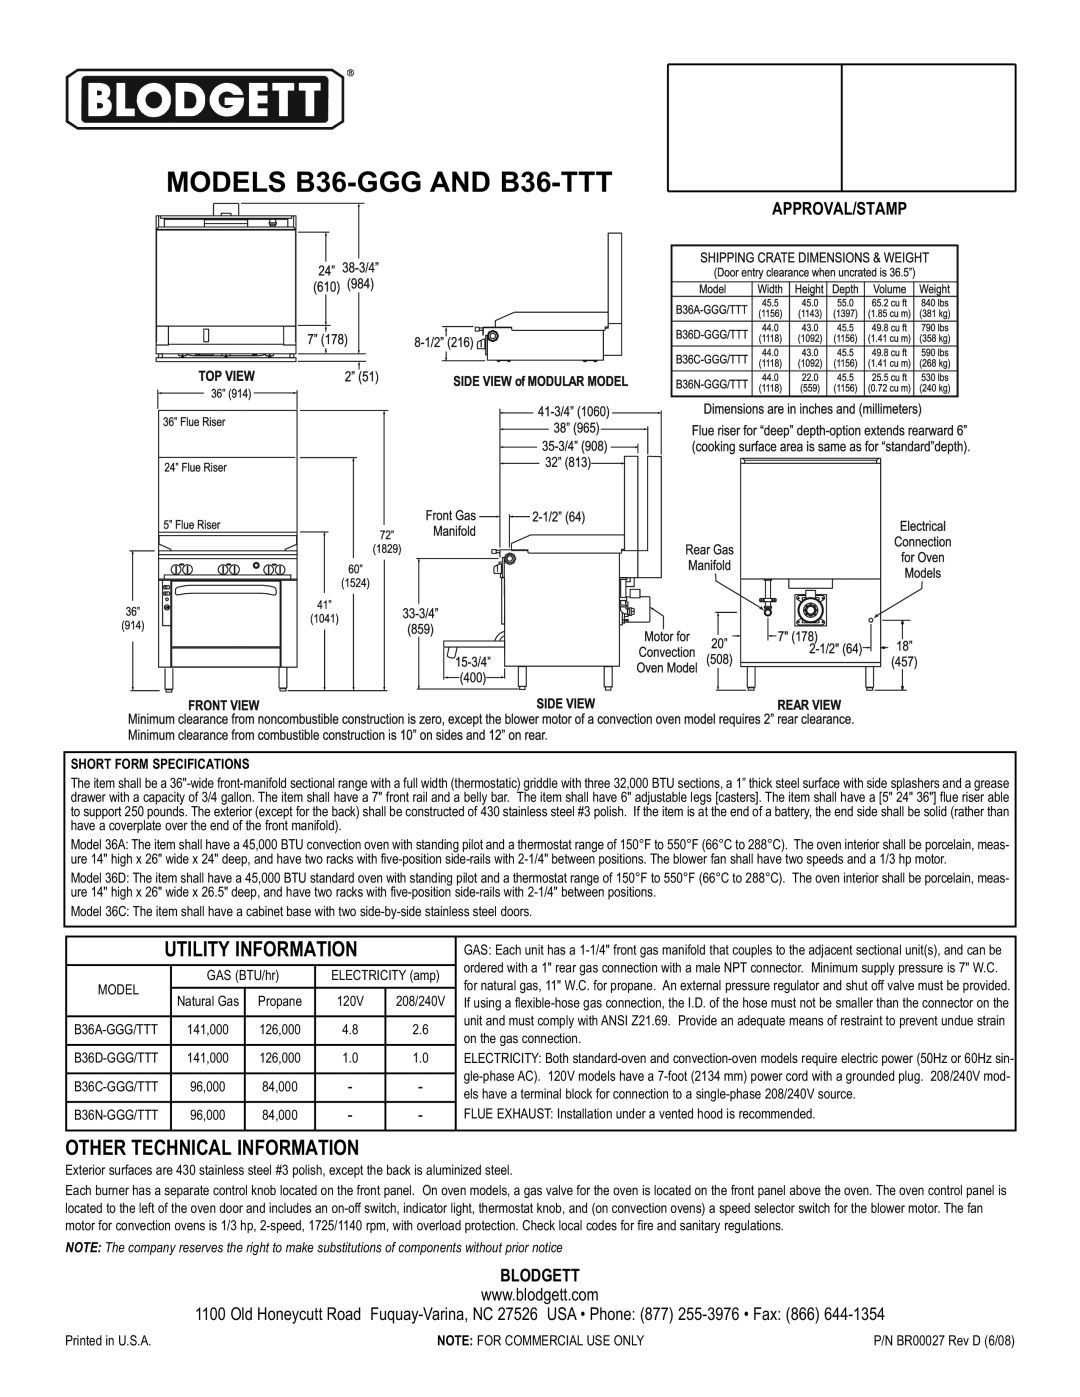 Blodgett warranty MODELS B36-GGGAND B36-TTT, Utility Information, Other Technical Information, Approval/Stamp, Blodgett 